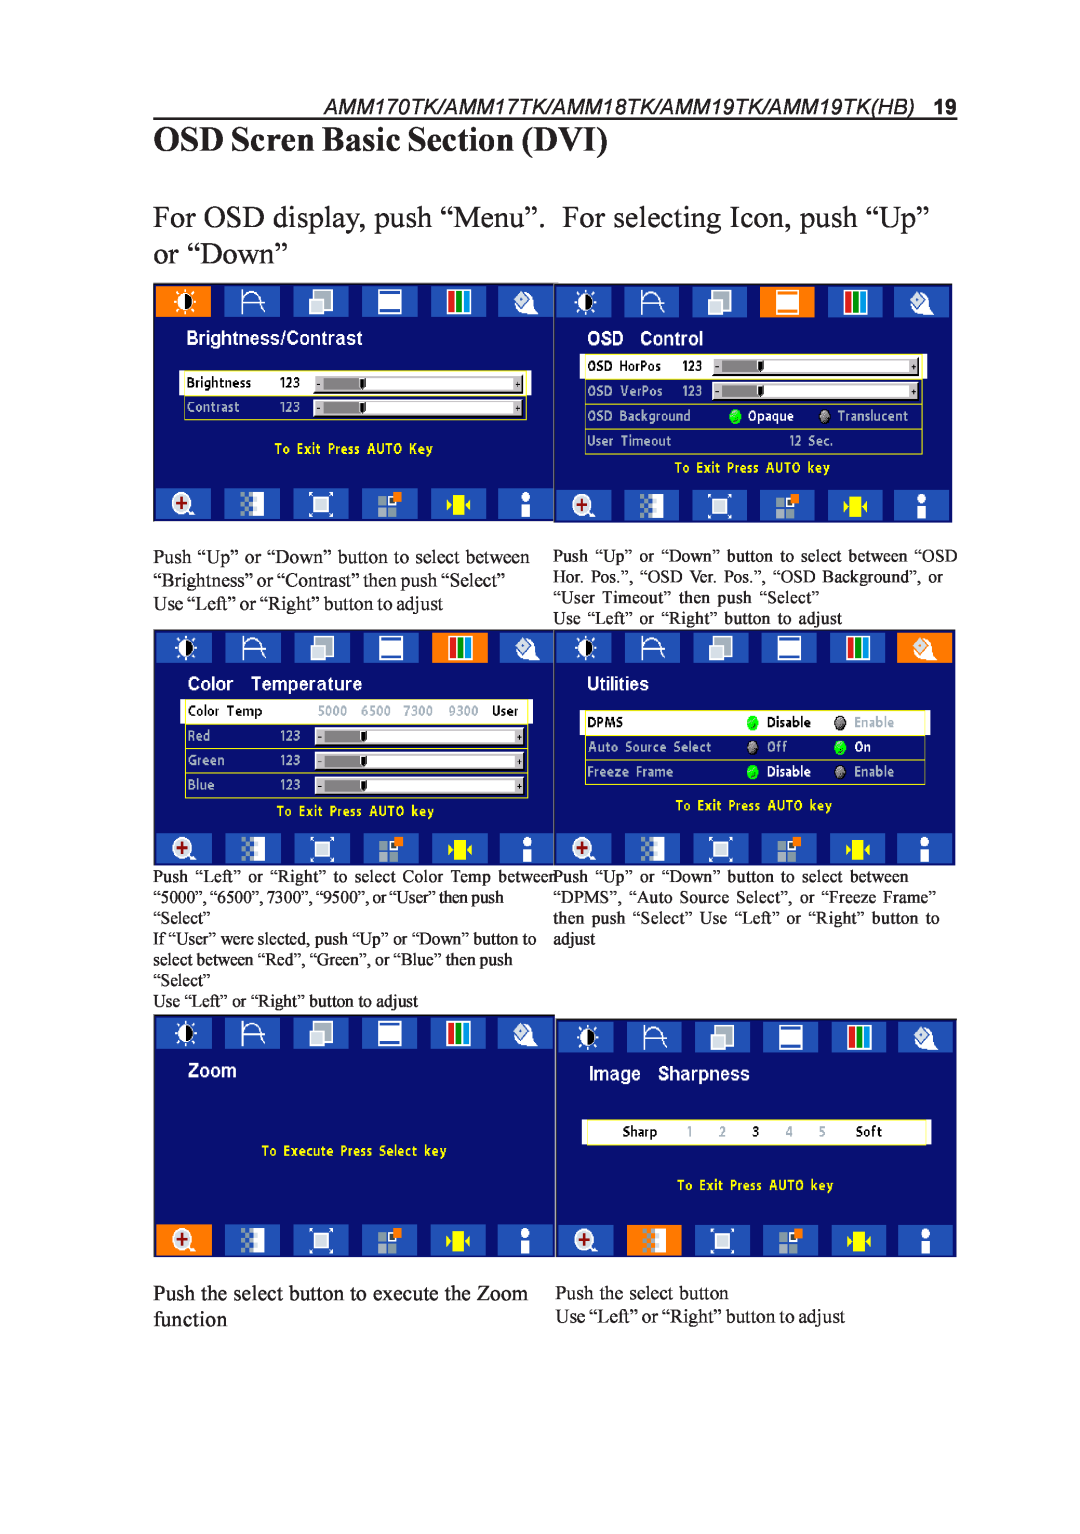 Elo TouchSystems manual OSD Scren Basic Section DVI, AMM170TK/AMM17TK/AMM18TK/AMM19TK/AMM19TKHB 